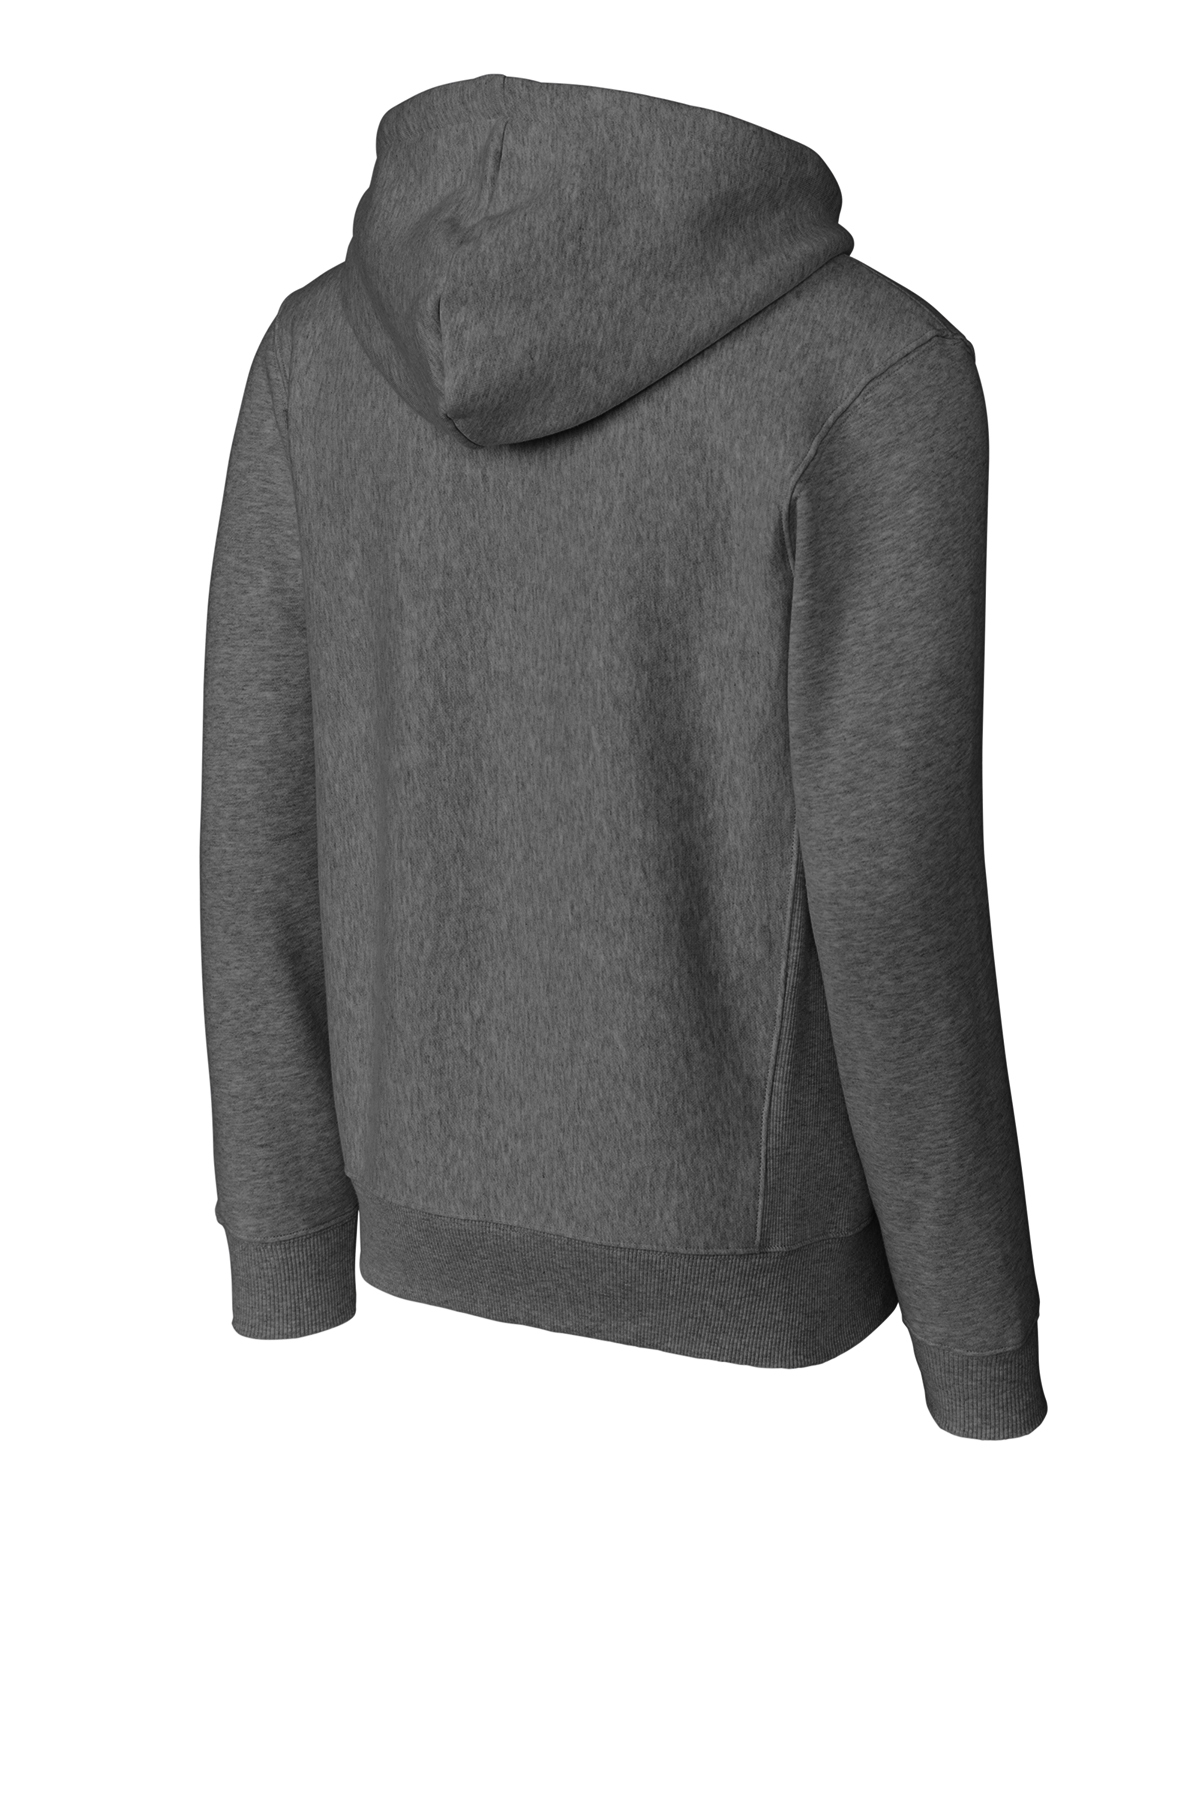 Sport-Tek Super Heavyweight Full-Zip Hooded Sweatshirt, Product